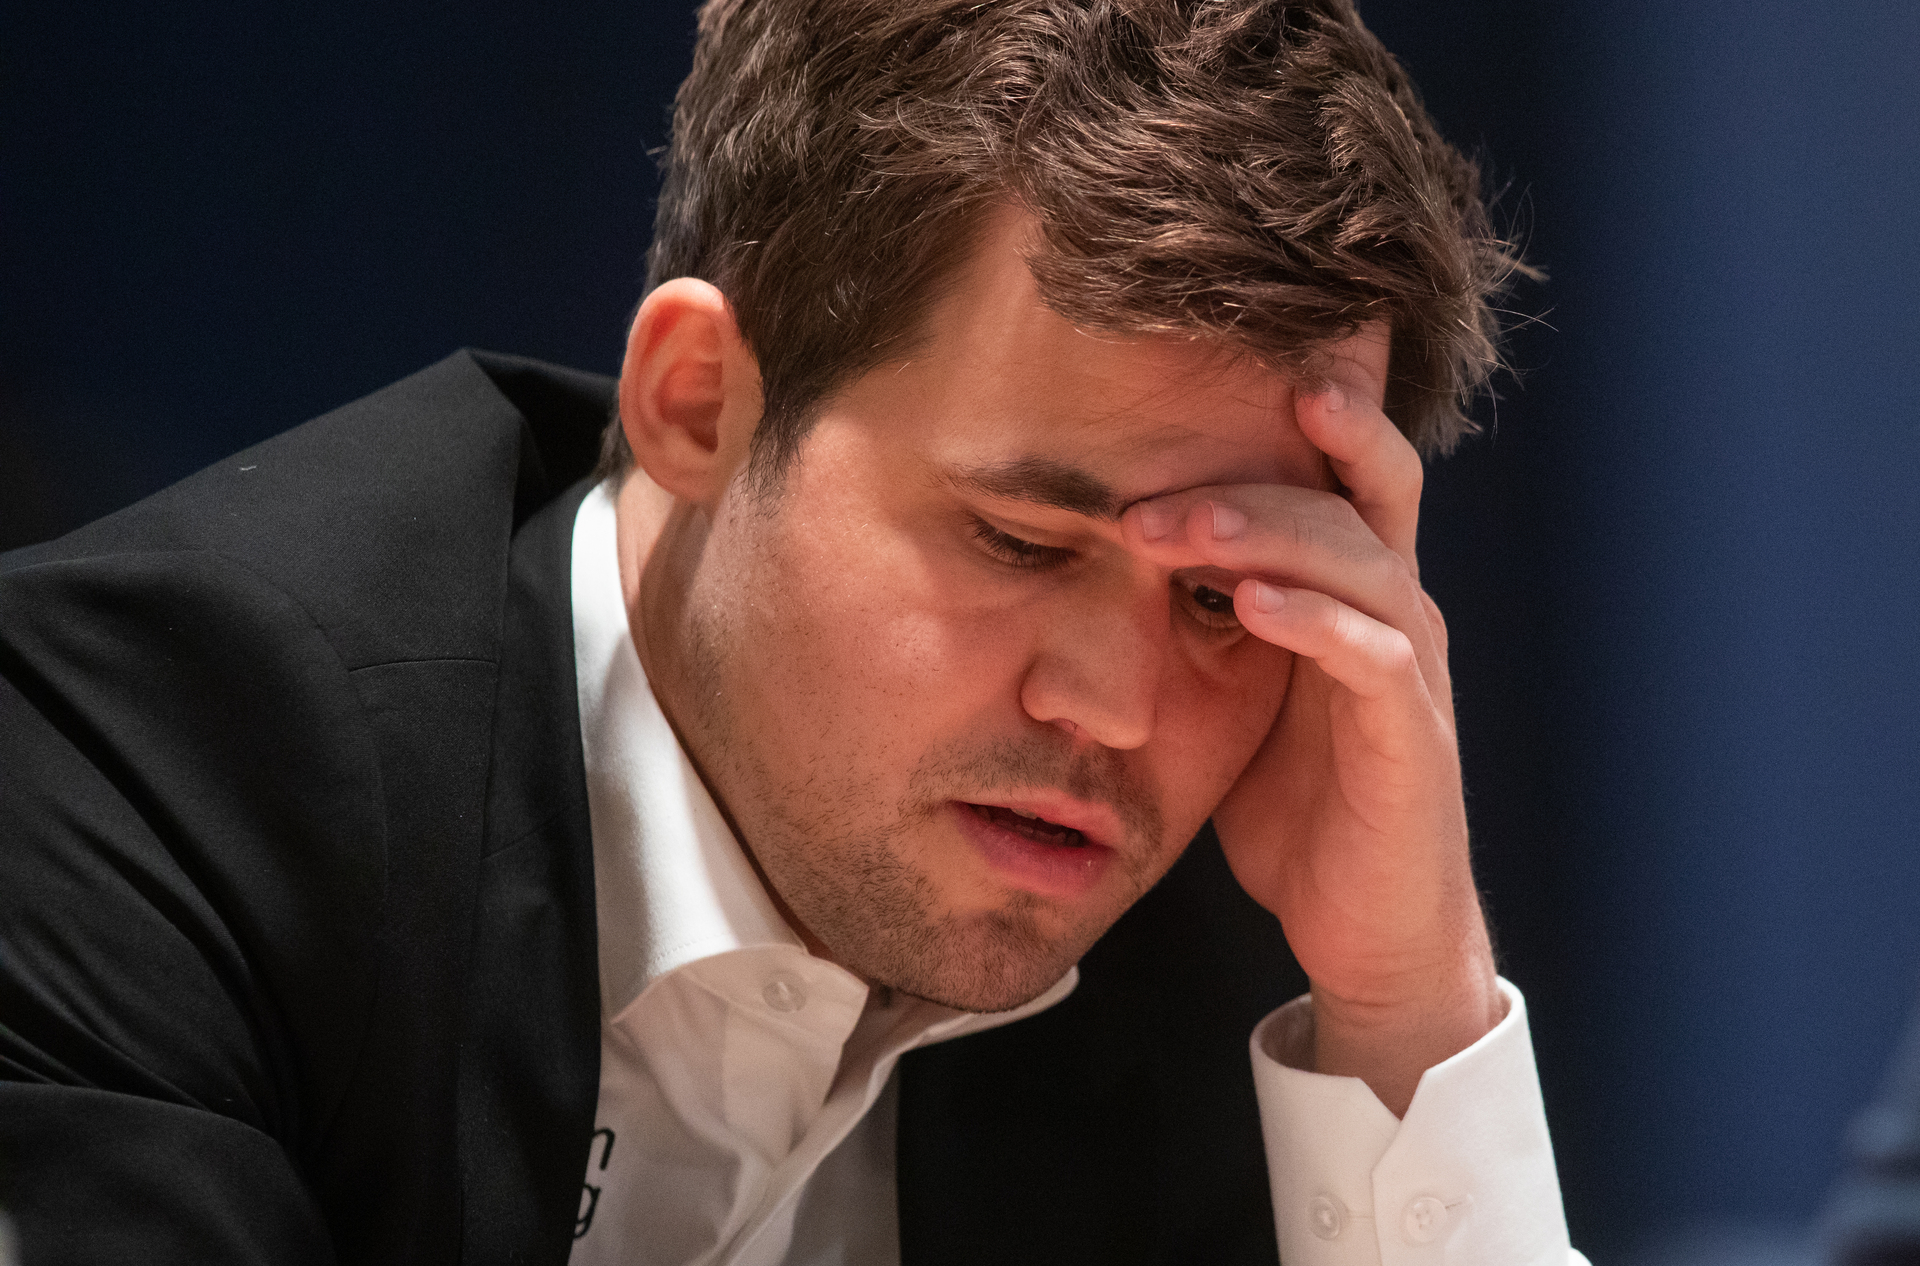 GothamChess: Hans Niemann, Magnus Carlsen, Cheating Scandal